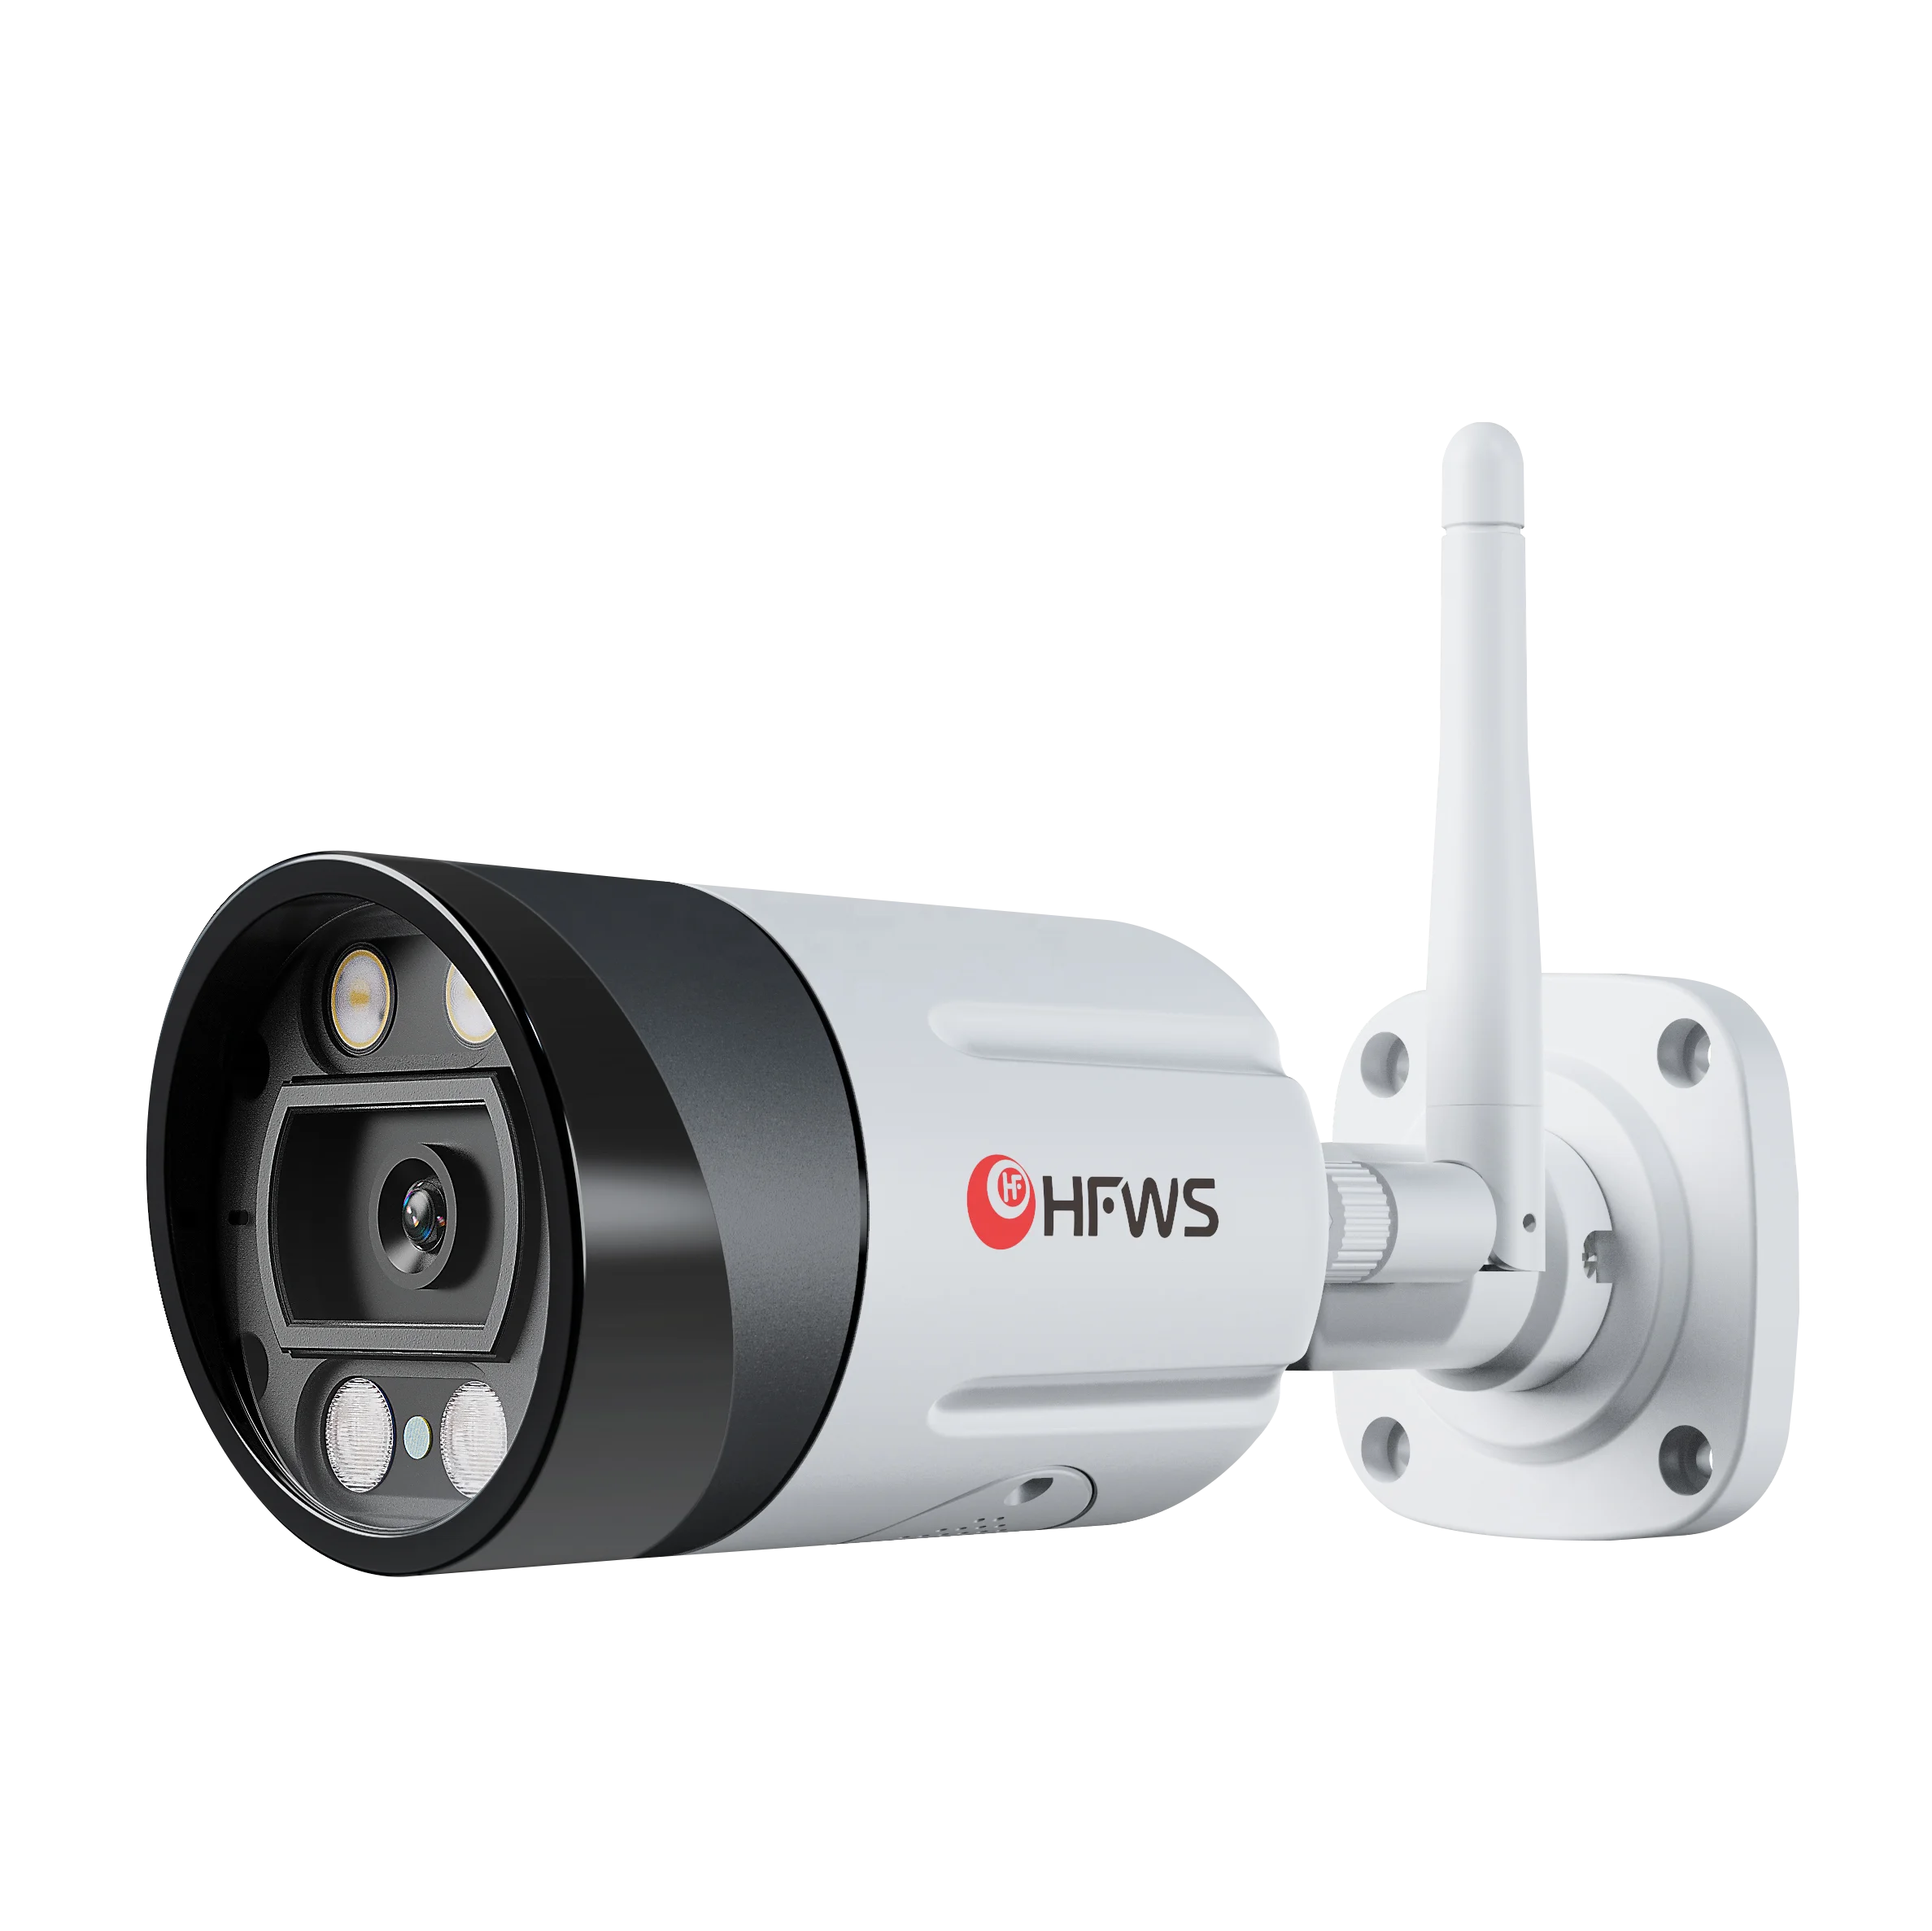 2MP IP Camera Dual Light Source Home Outdoor Waterproof NIGHT VISION Wireless Security Surveillance Wifi CCTV Camera